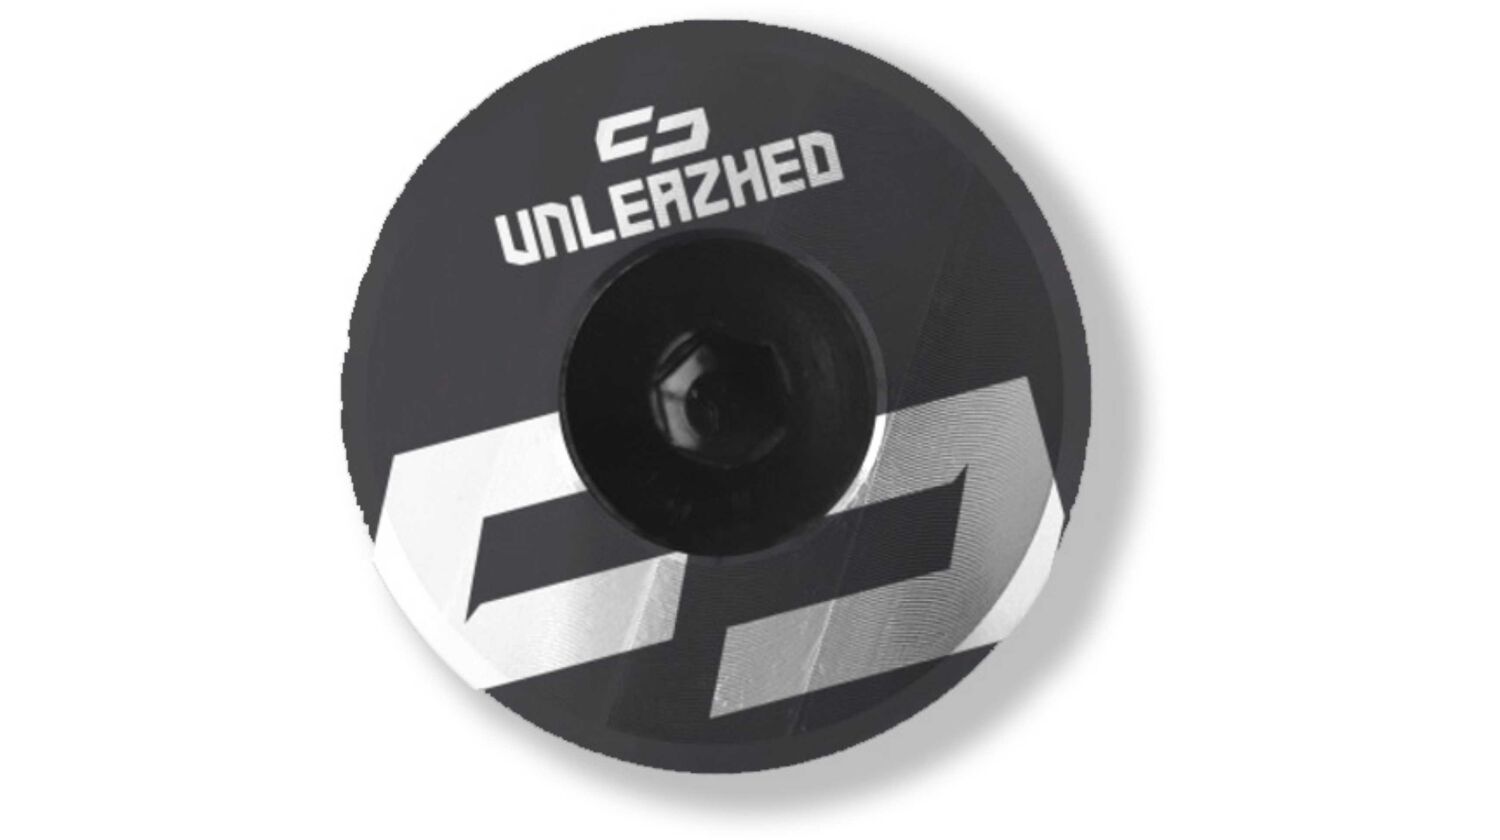 Unleazhed AL01 Top Cap Aluminium Logo Skin 1 pcs, 1 aluminium screw M6 black